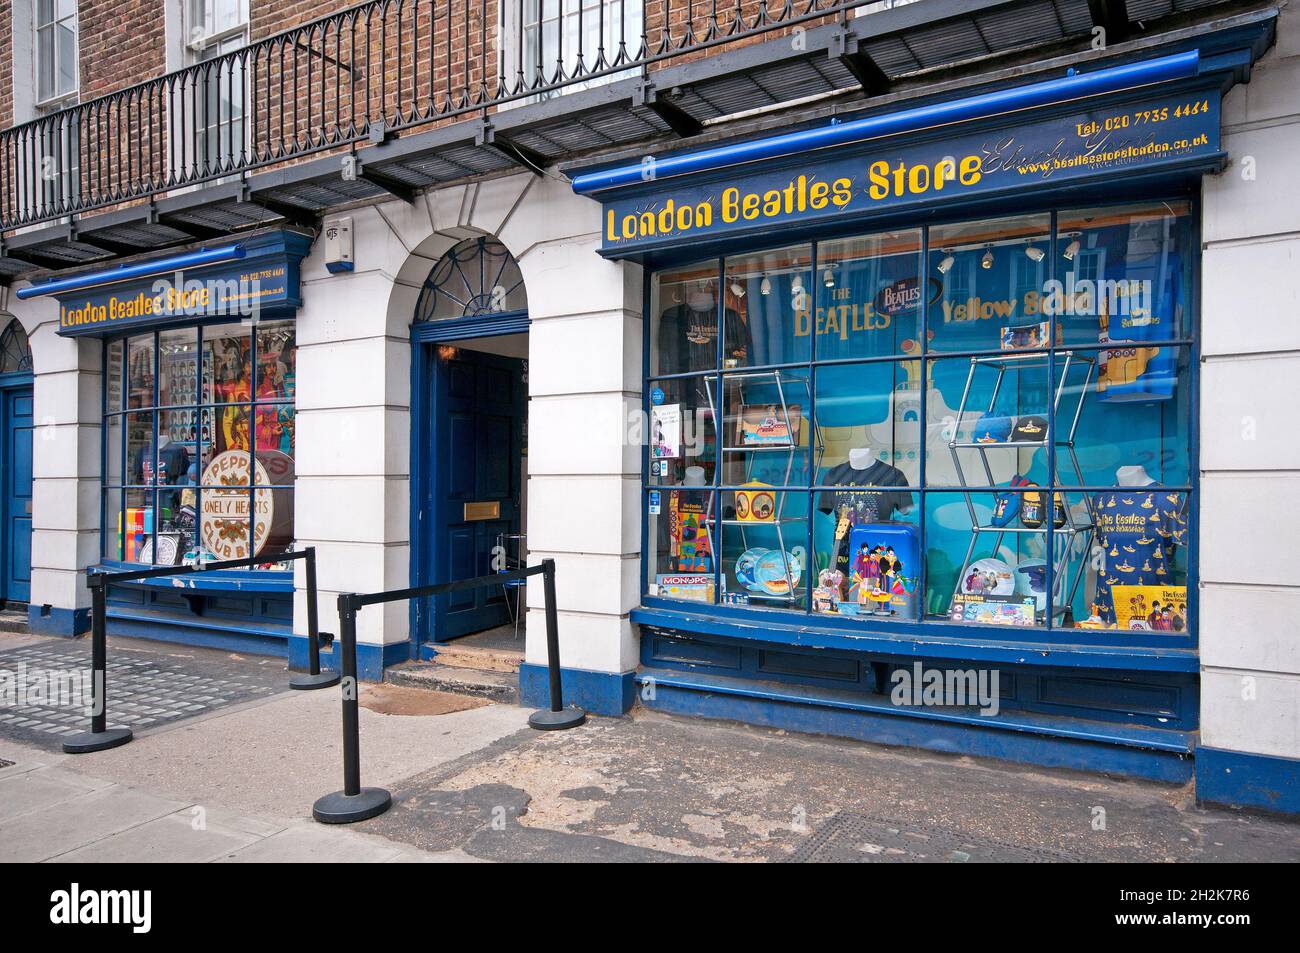 London Beatles Store in Baker Street, London, England Stock Photo